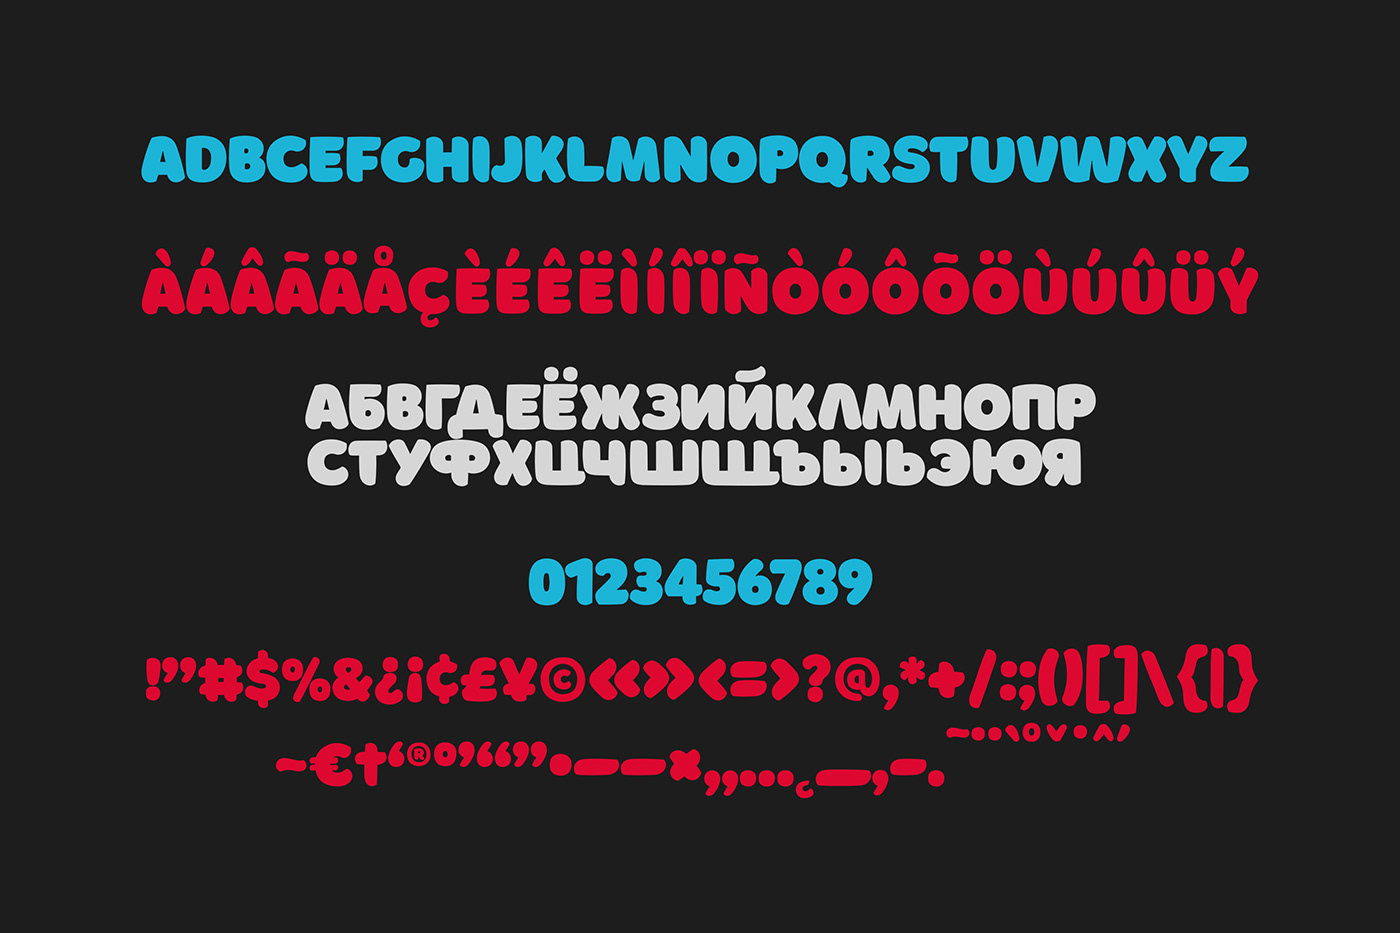 Free font Cyrillic кириллица bold font type free type donate bishkek kyrgyzstan kyrgyz font